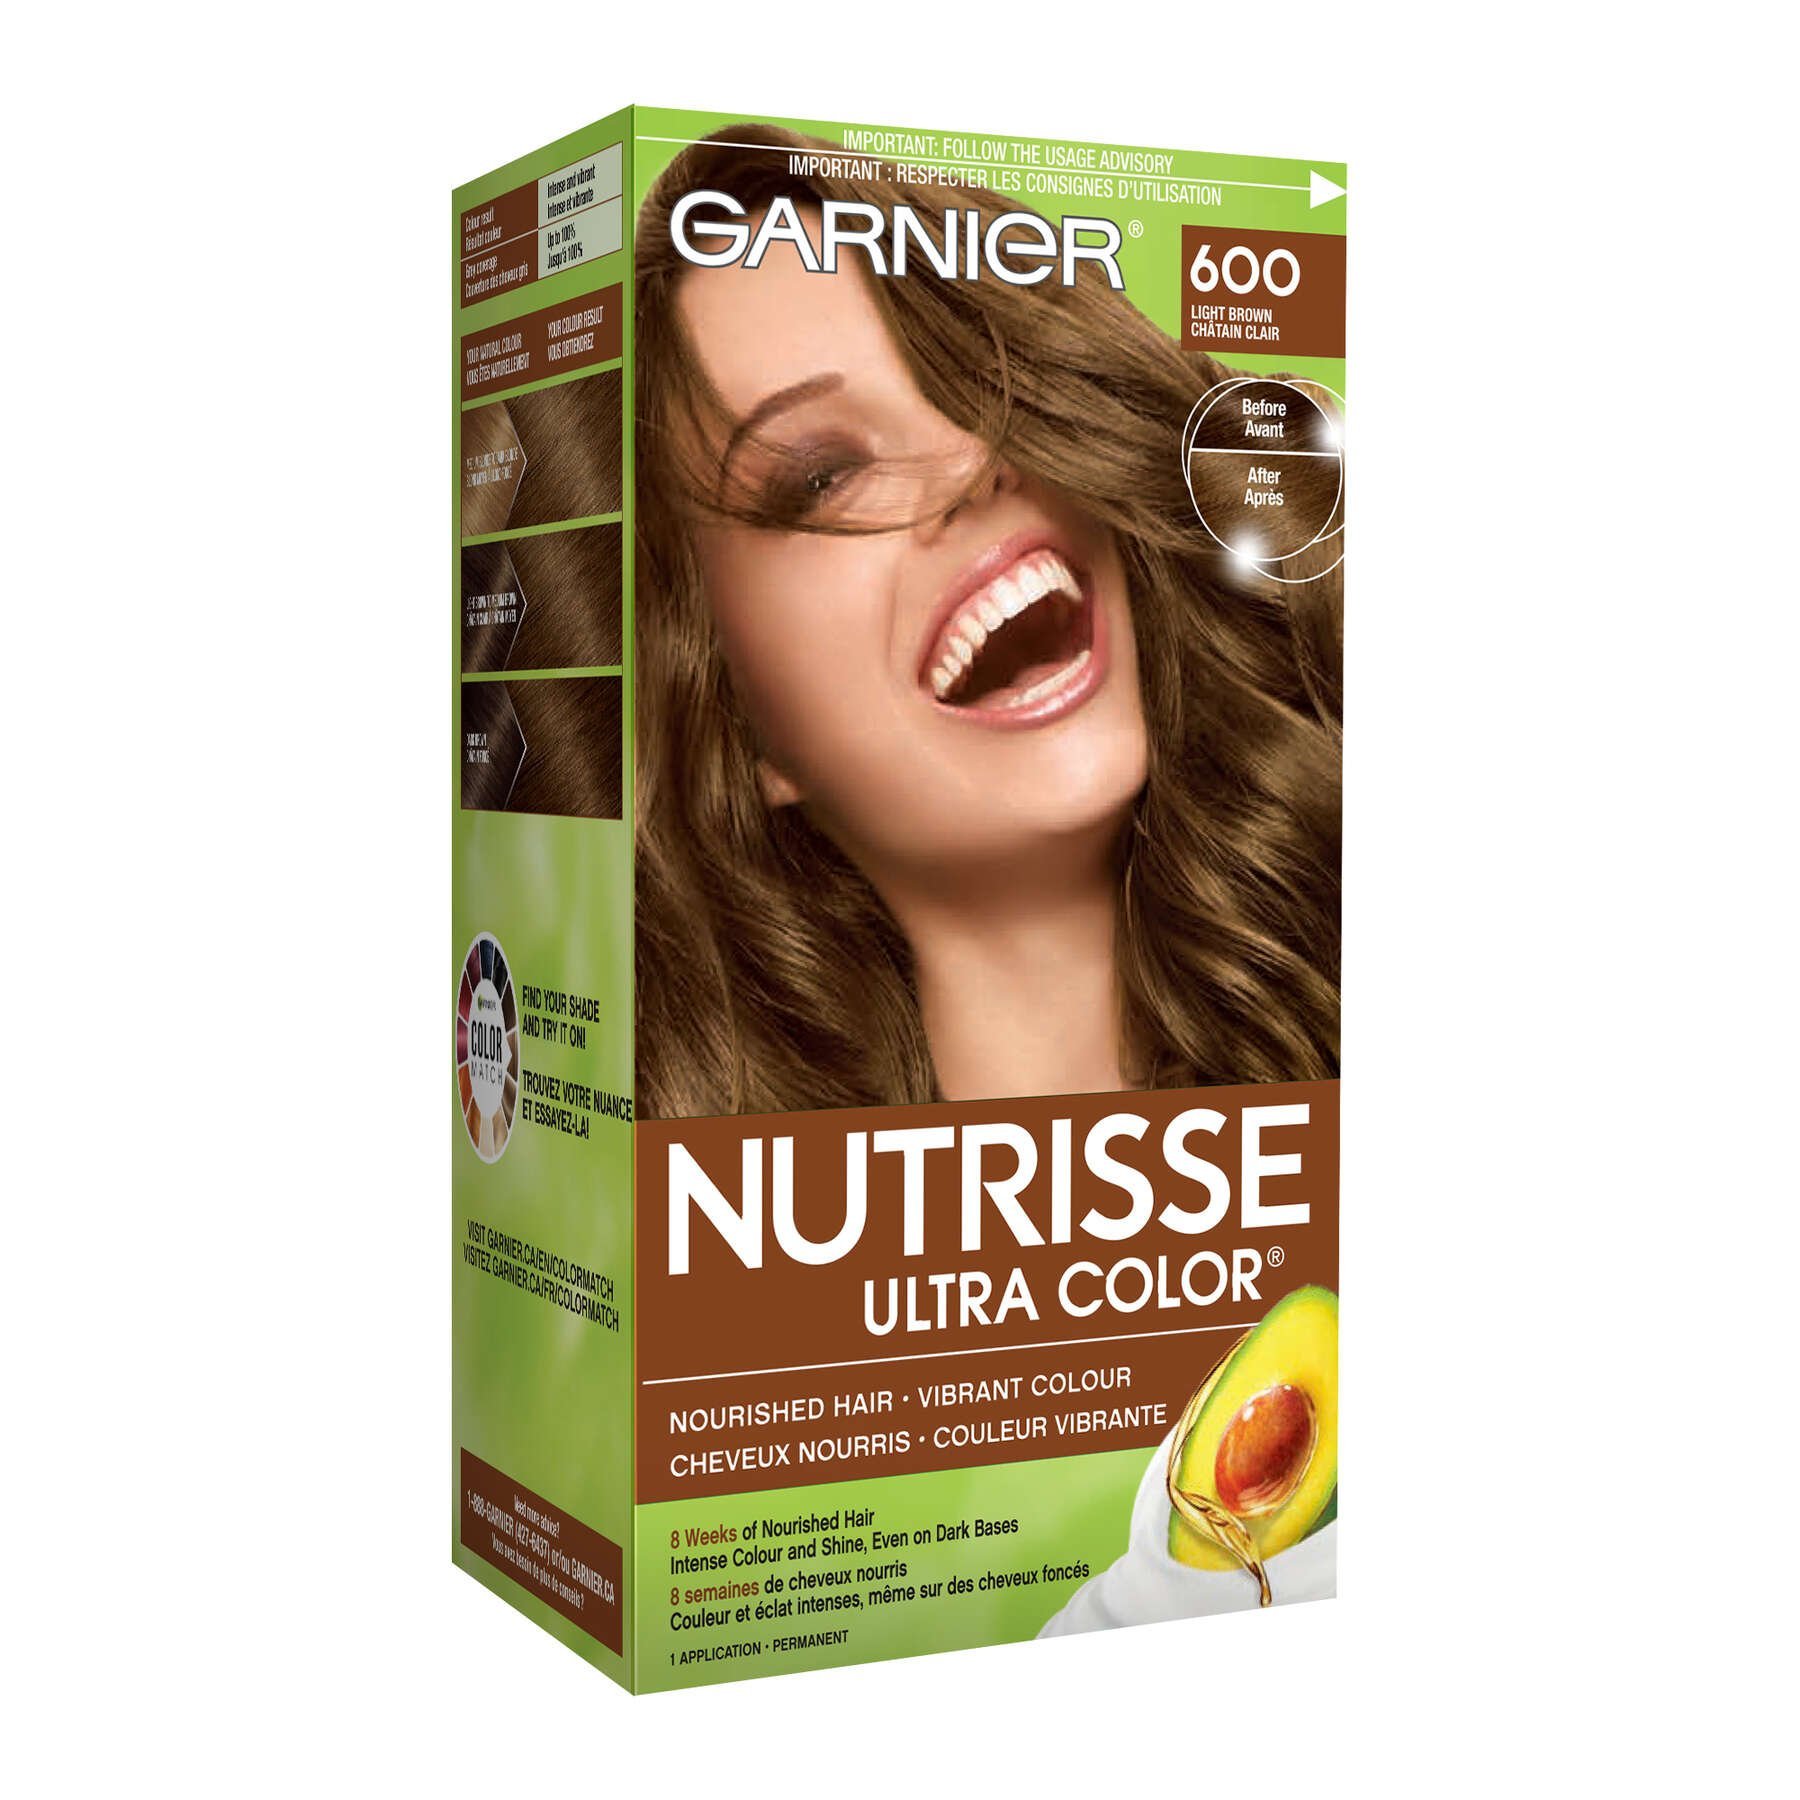 garnier hair dye nutrisse ultra color 600 light brown 603084469642 boxed